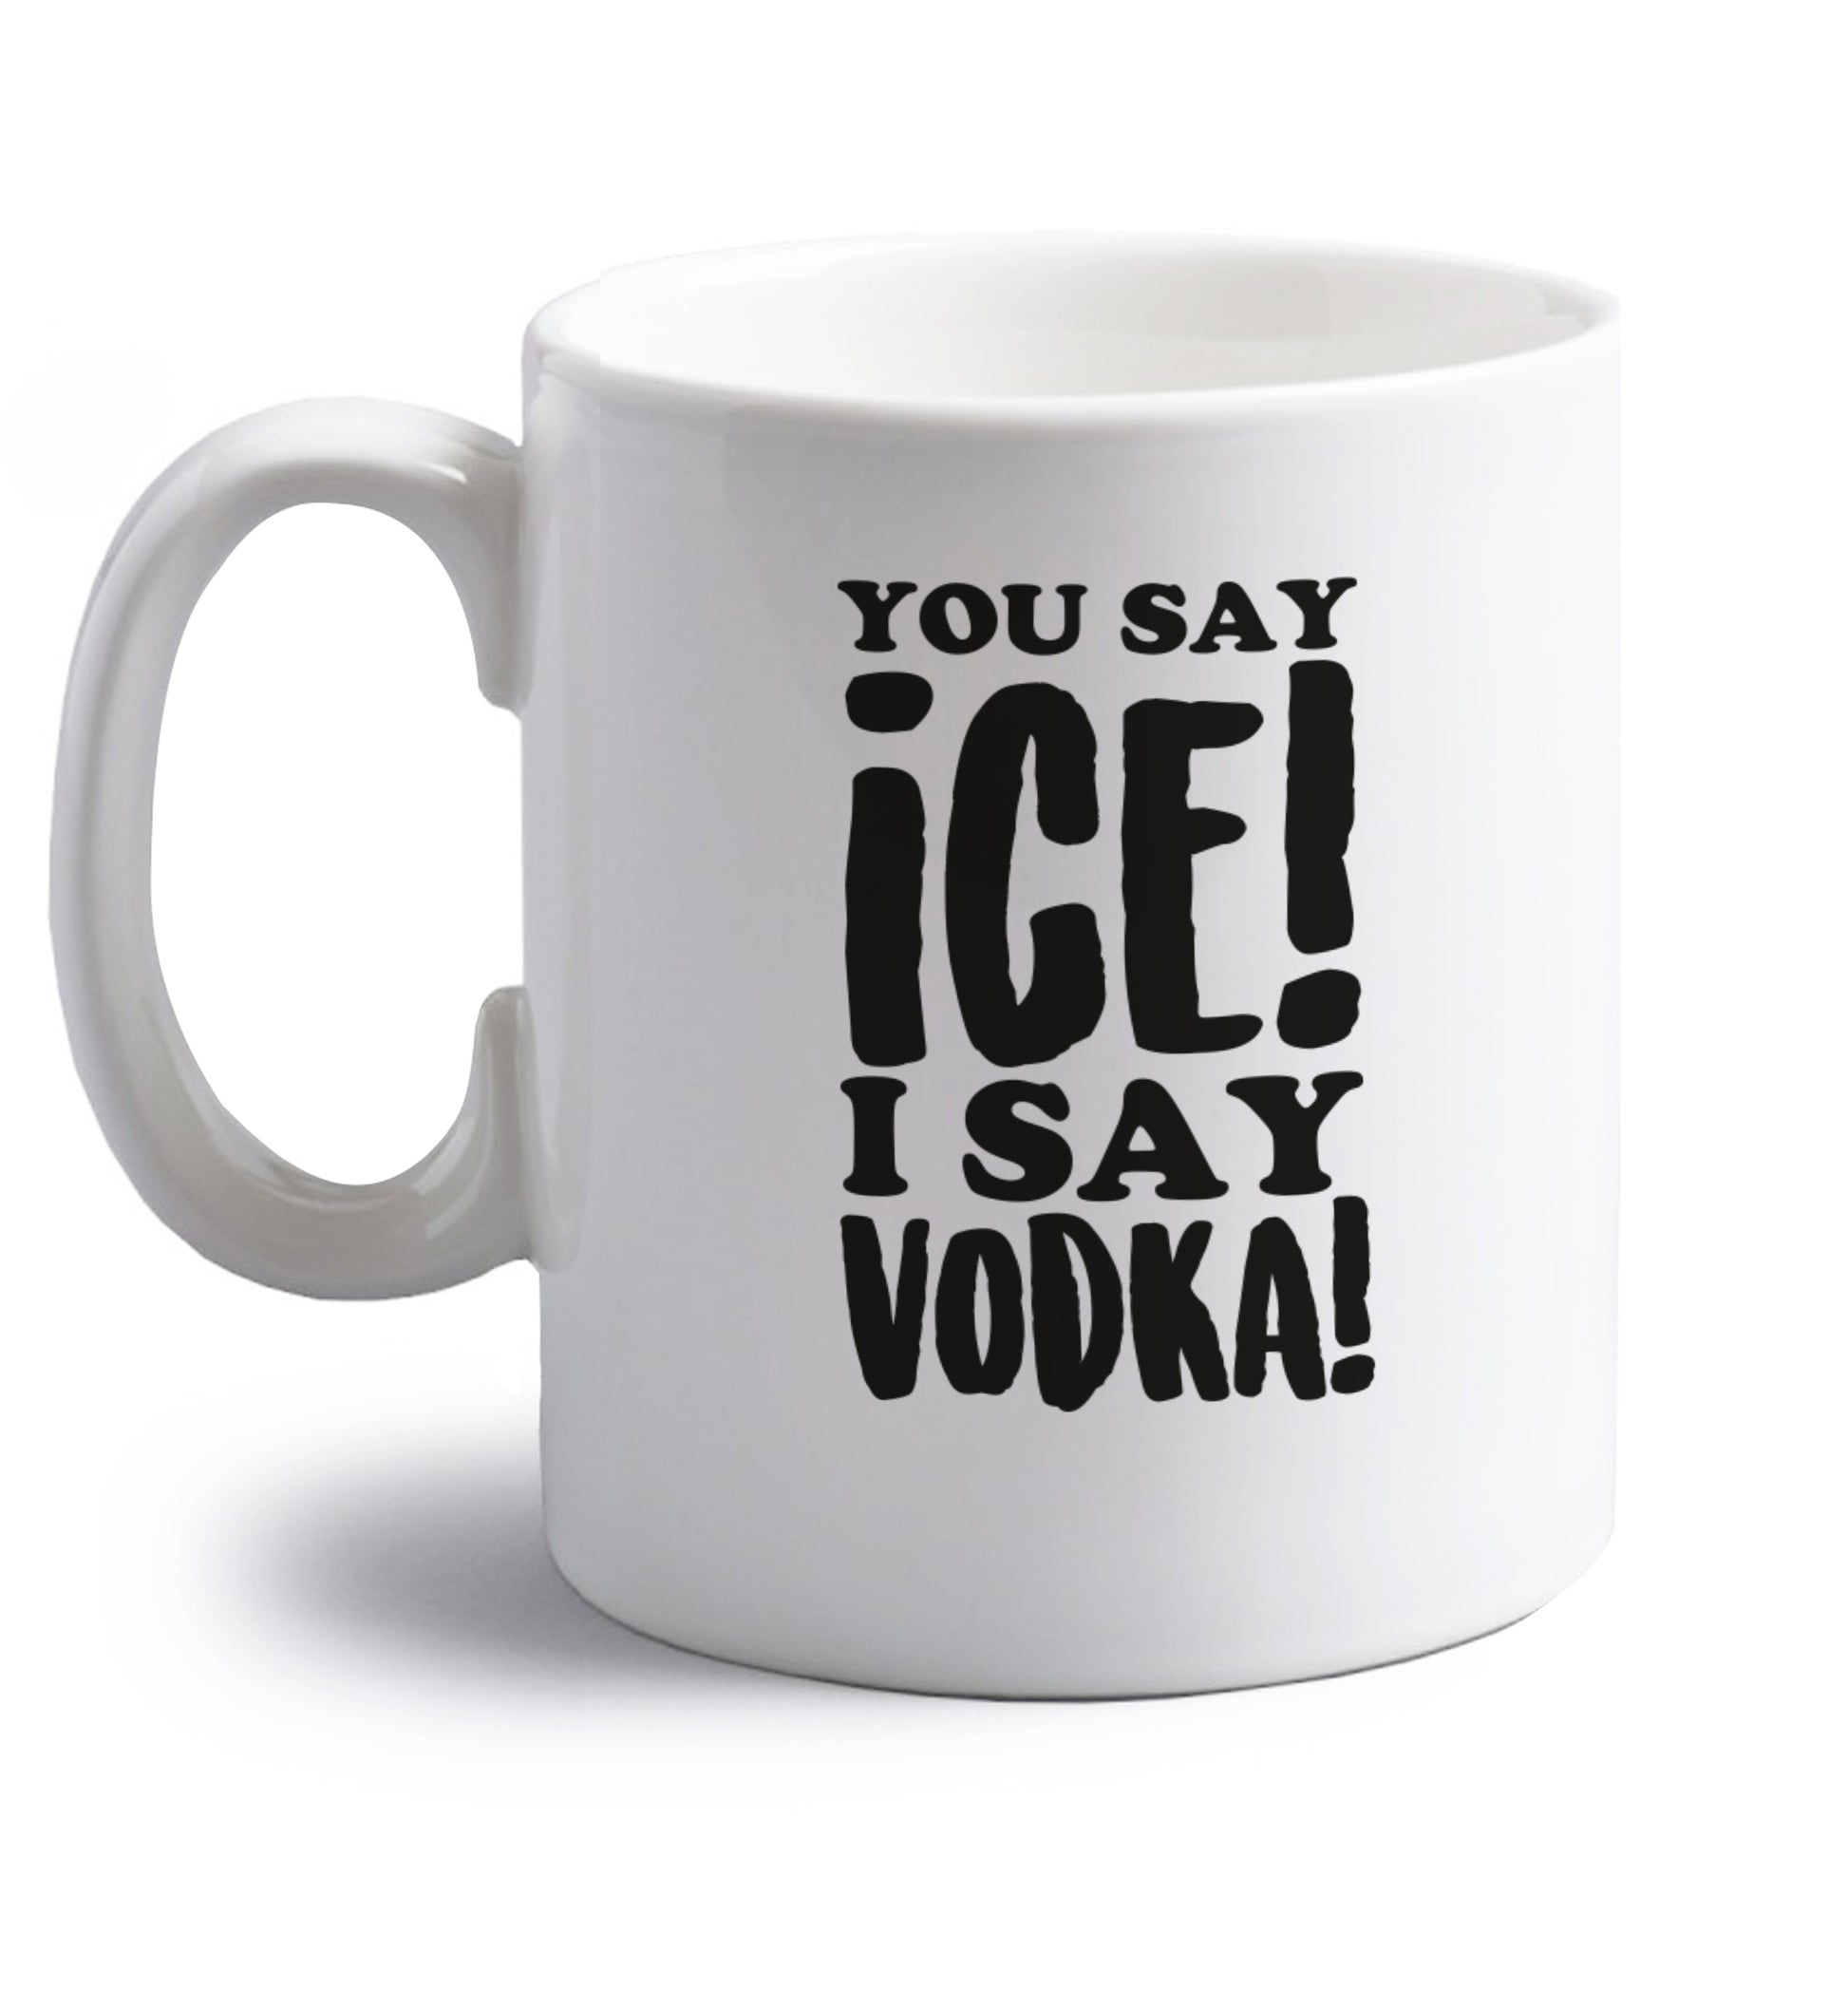 You say ice I say vodka! right handed white ceramic mug 